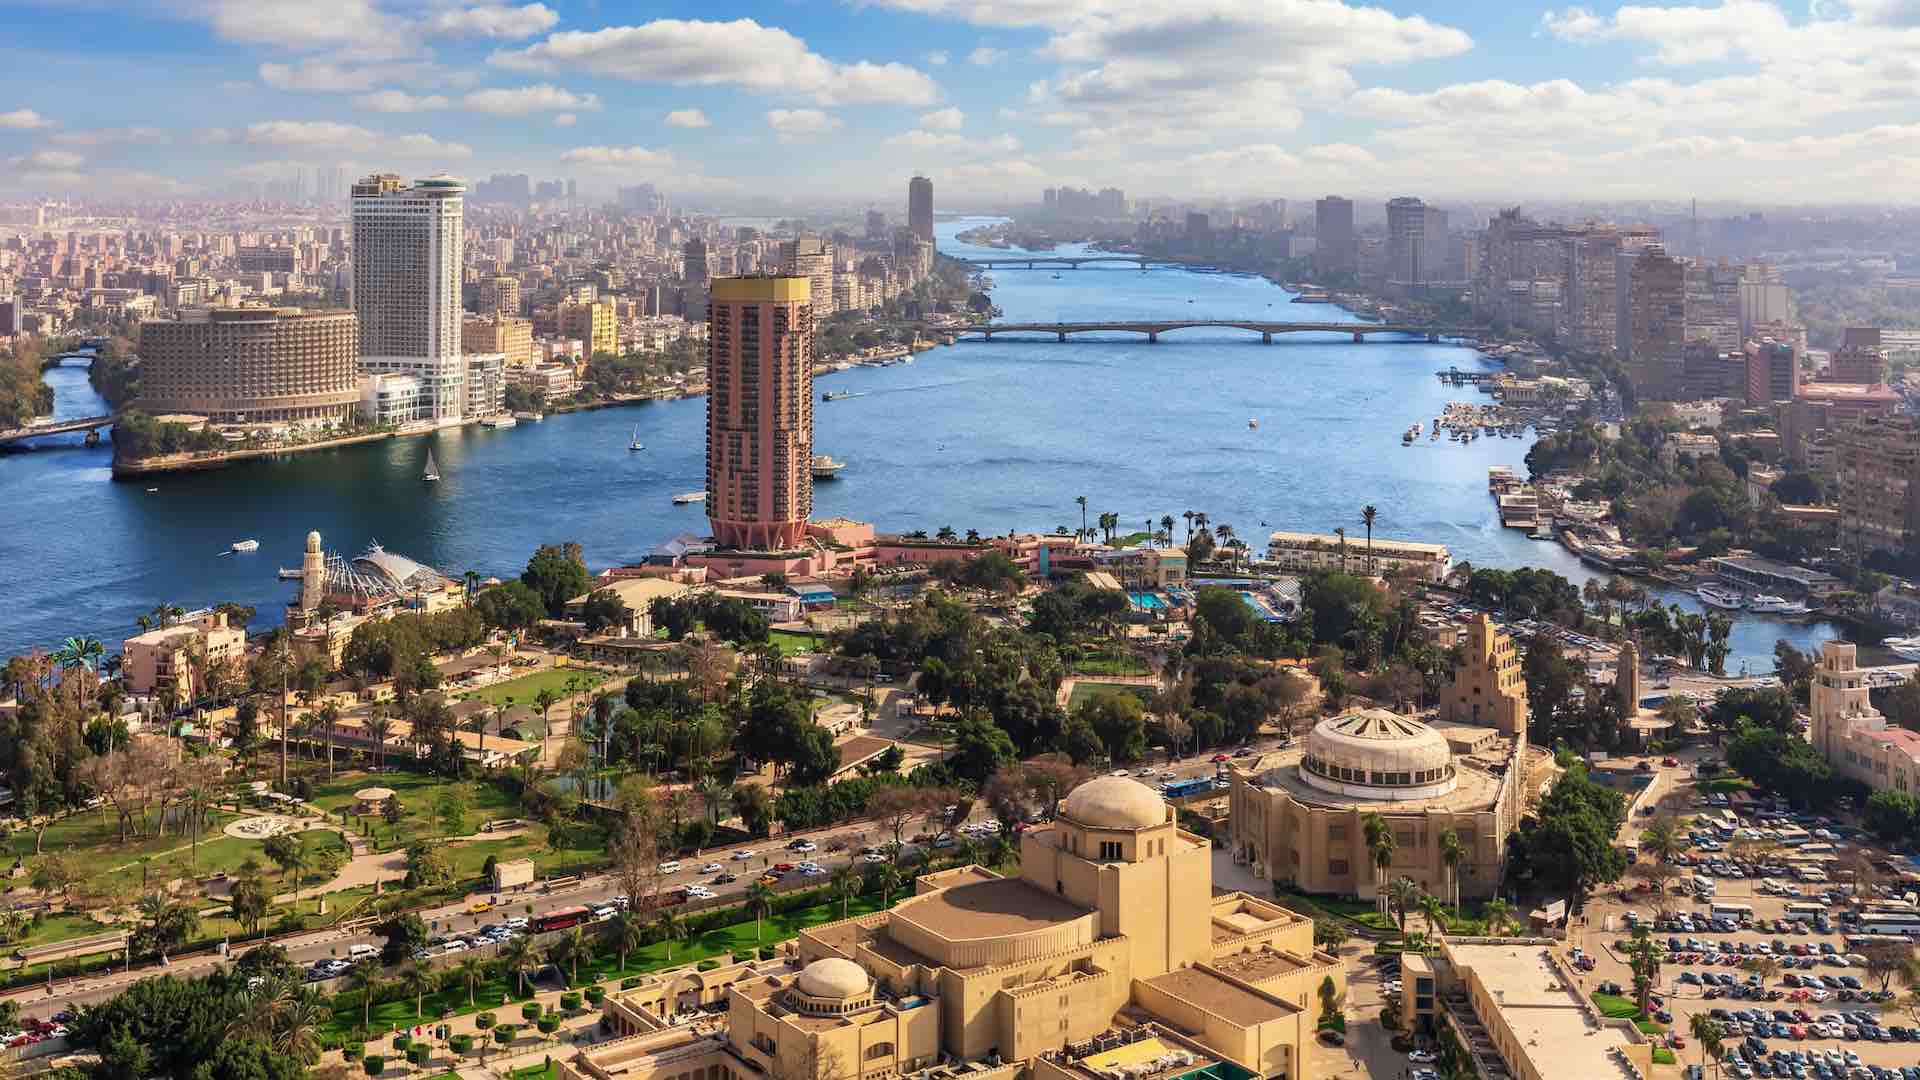 Progressive policies and economic strength mark Egypt's growth under El-Sisi